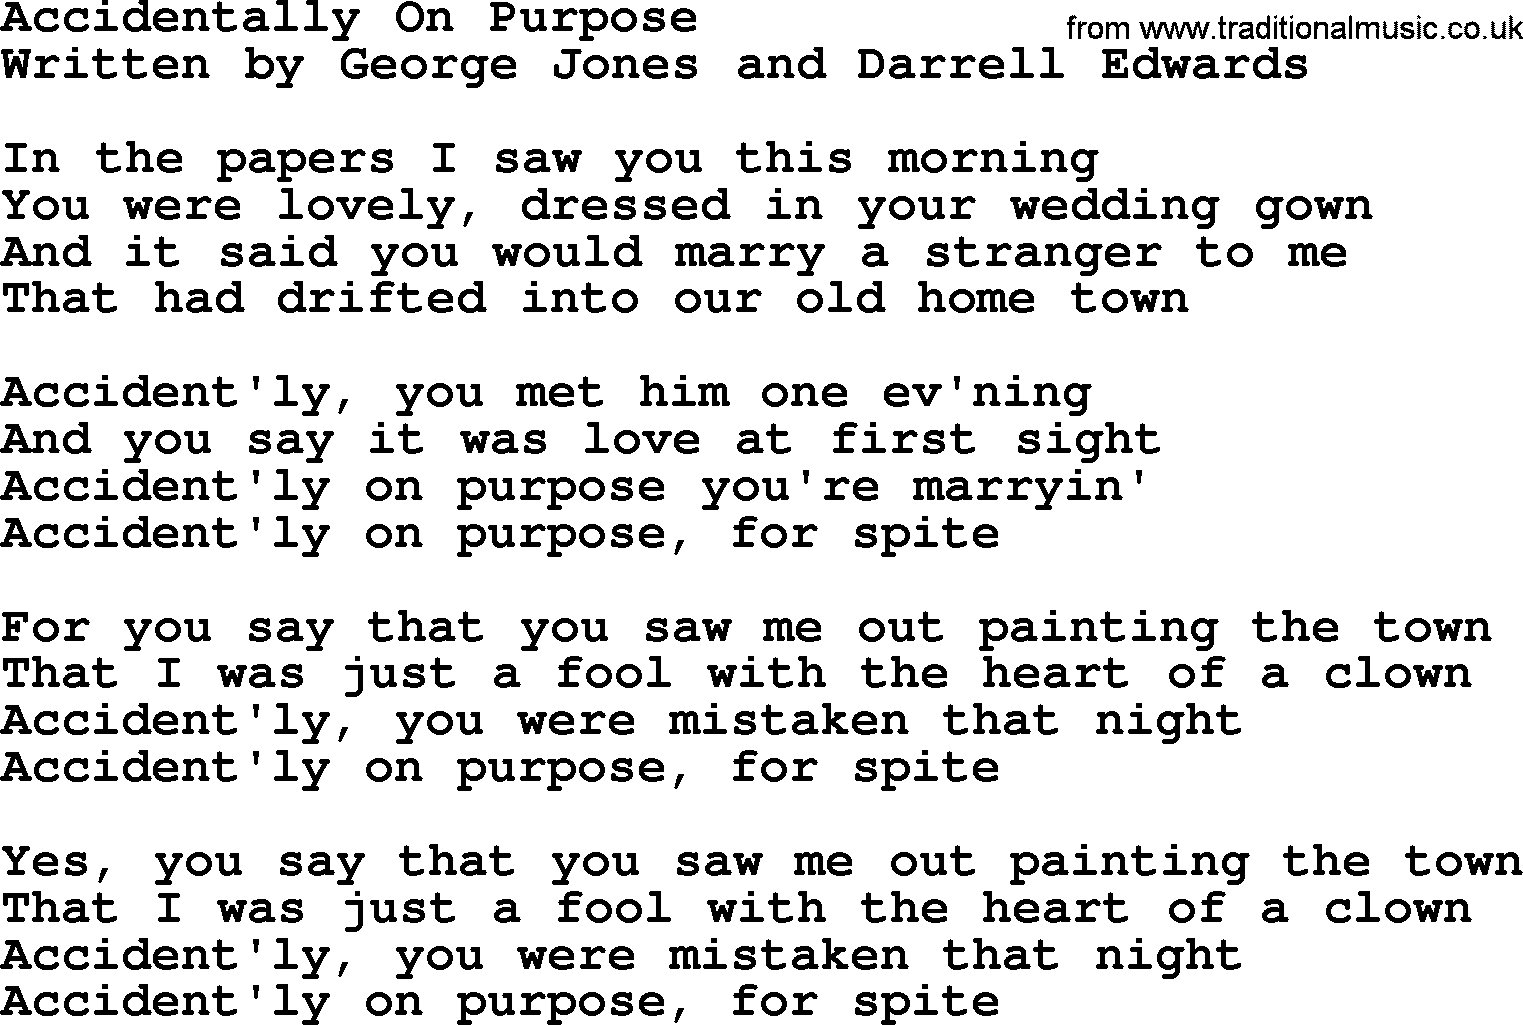 George Jones song: Accidentally On Purpose, lyrics